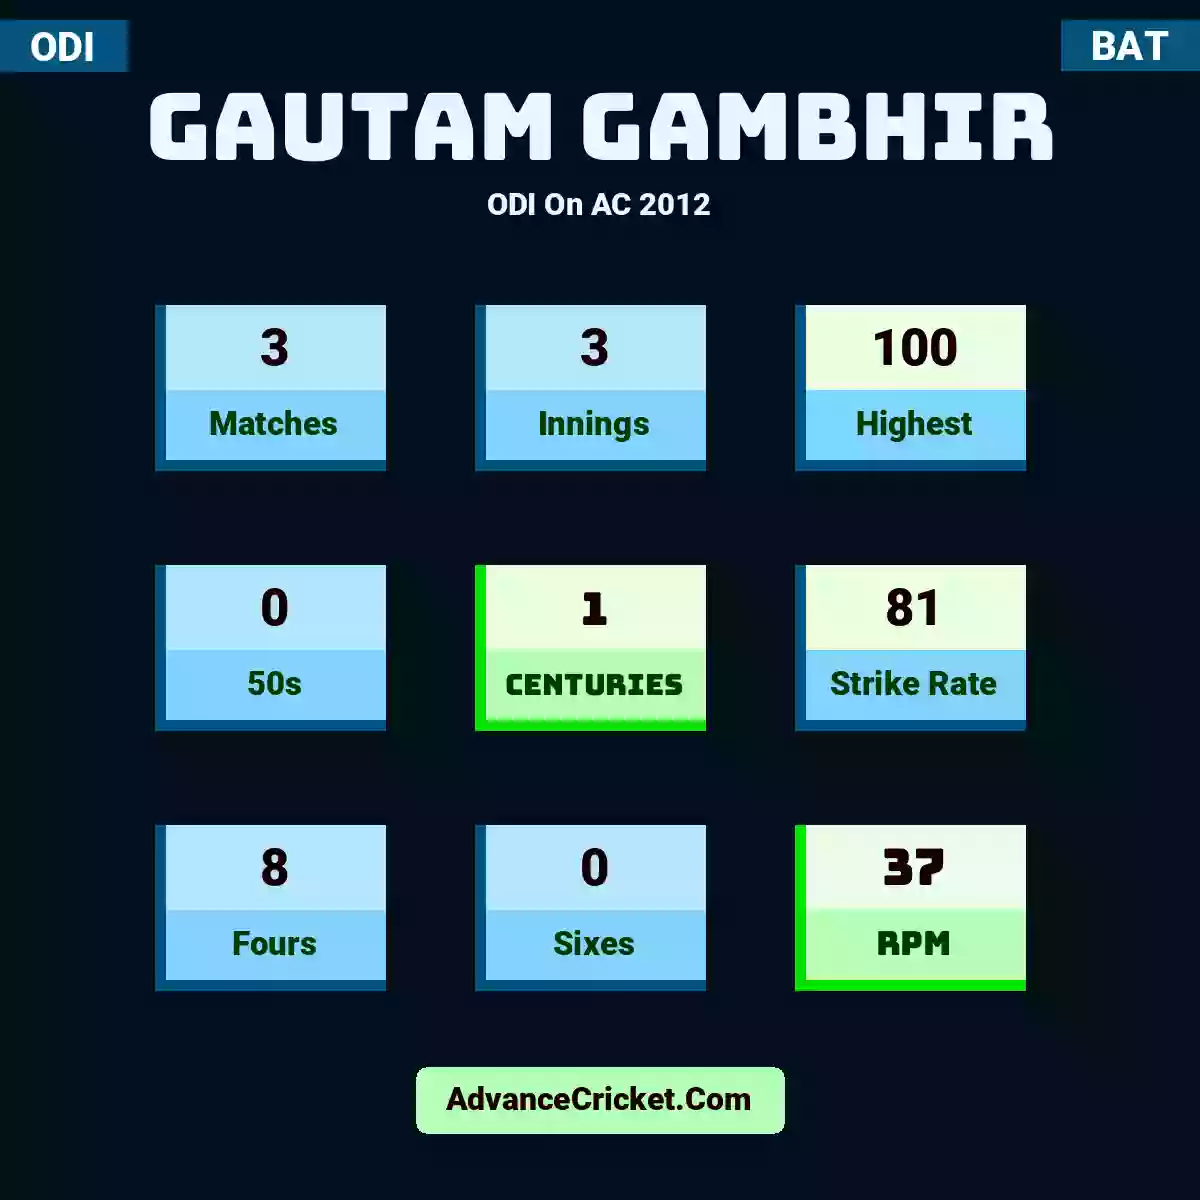 Gautam Gambhir ODI  On AC 2012, Gautam Gambhir played 3 matches, scored 100 runs as highest, 0 half-centuries, and 1 centuries, with a strike rate of 81. G.Gambhir hit 8 fours and 0 sixes, with an RPM of 37.